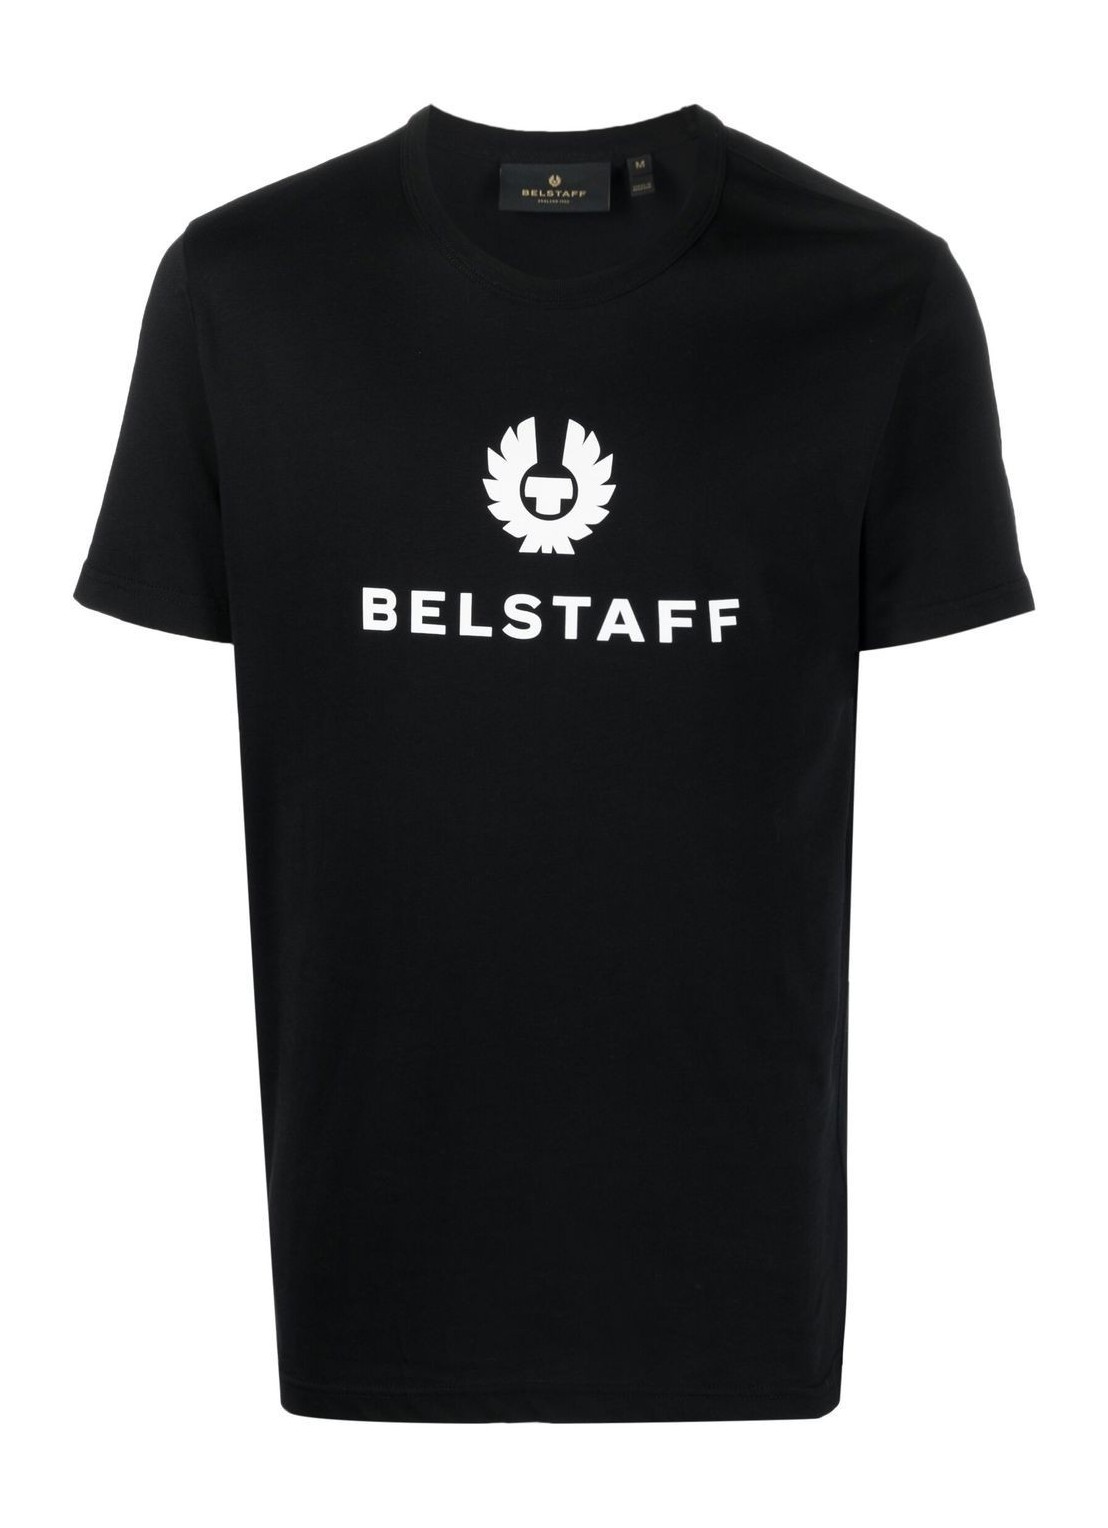 Camiseta belstaff t-shirt man belstaff signature t-shirt 104141 black talla M
 